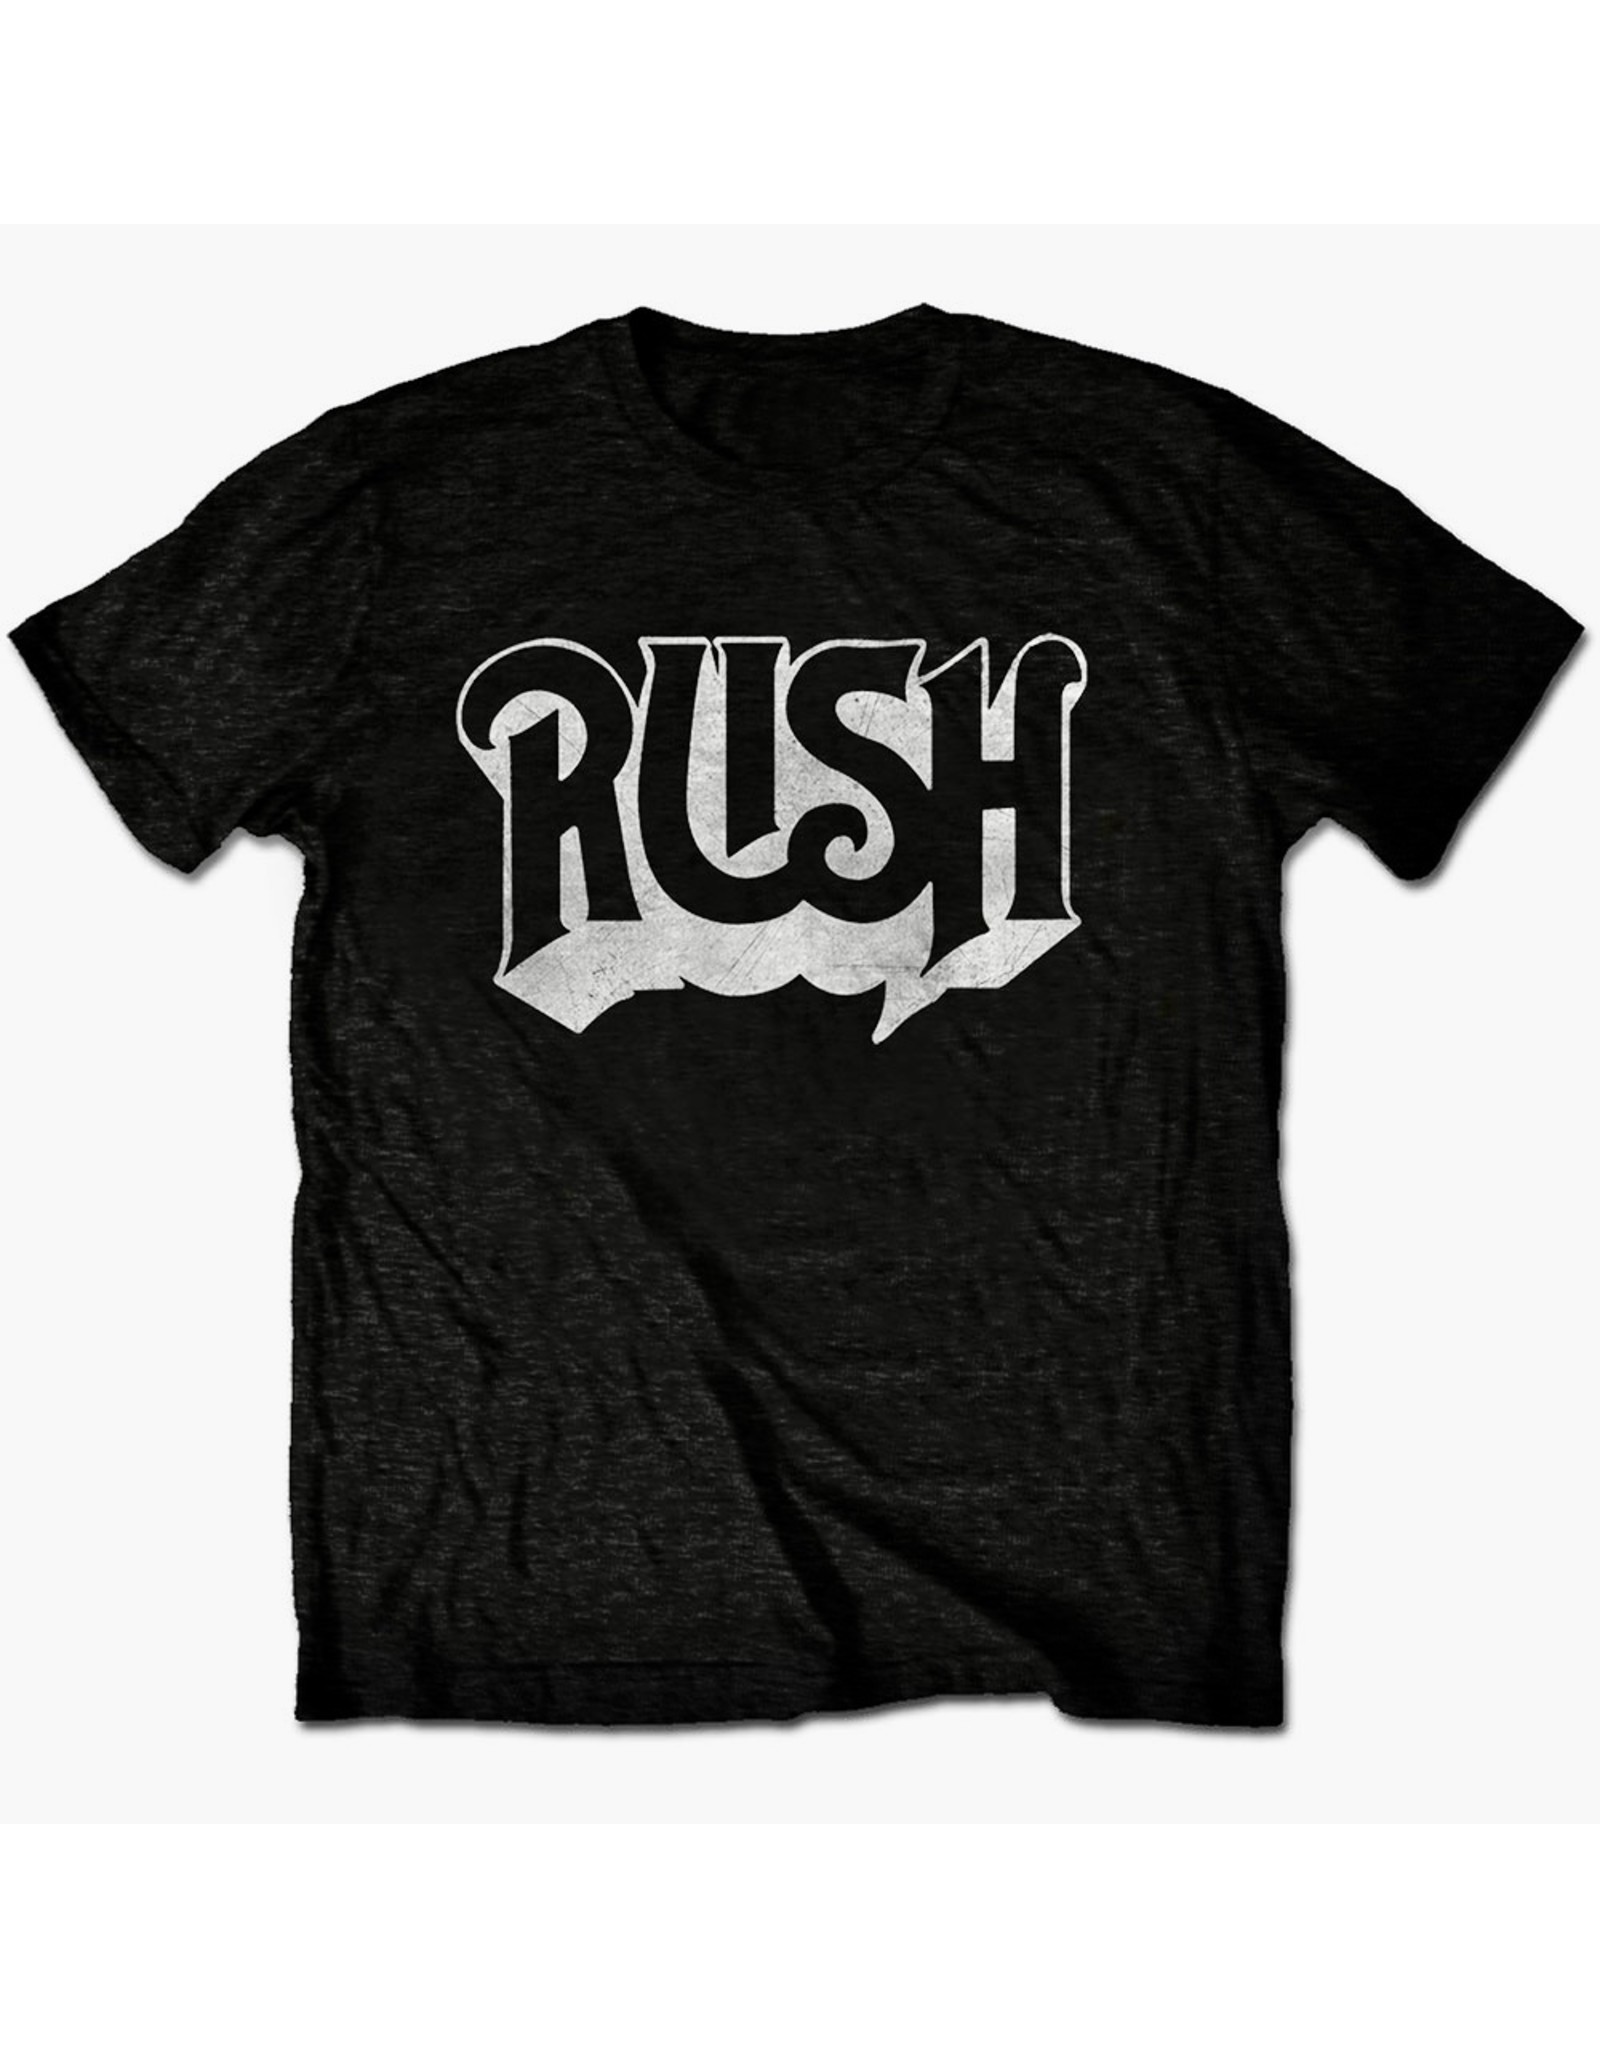 Rush - Canadian Progressive Rock Icons